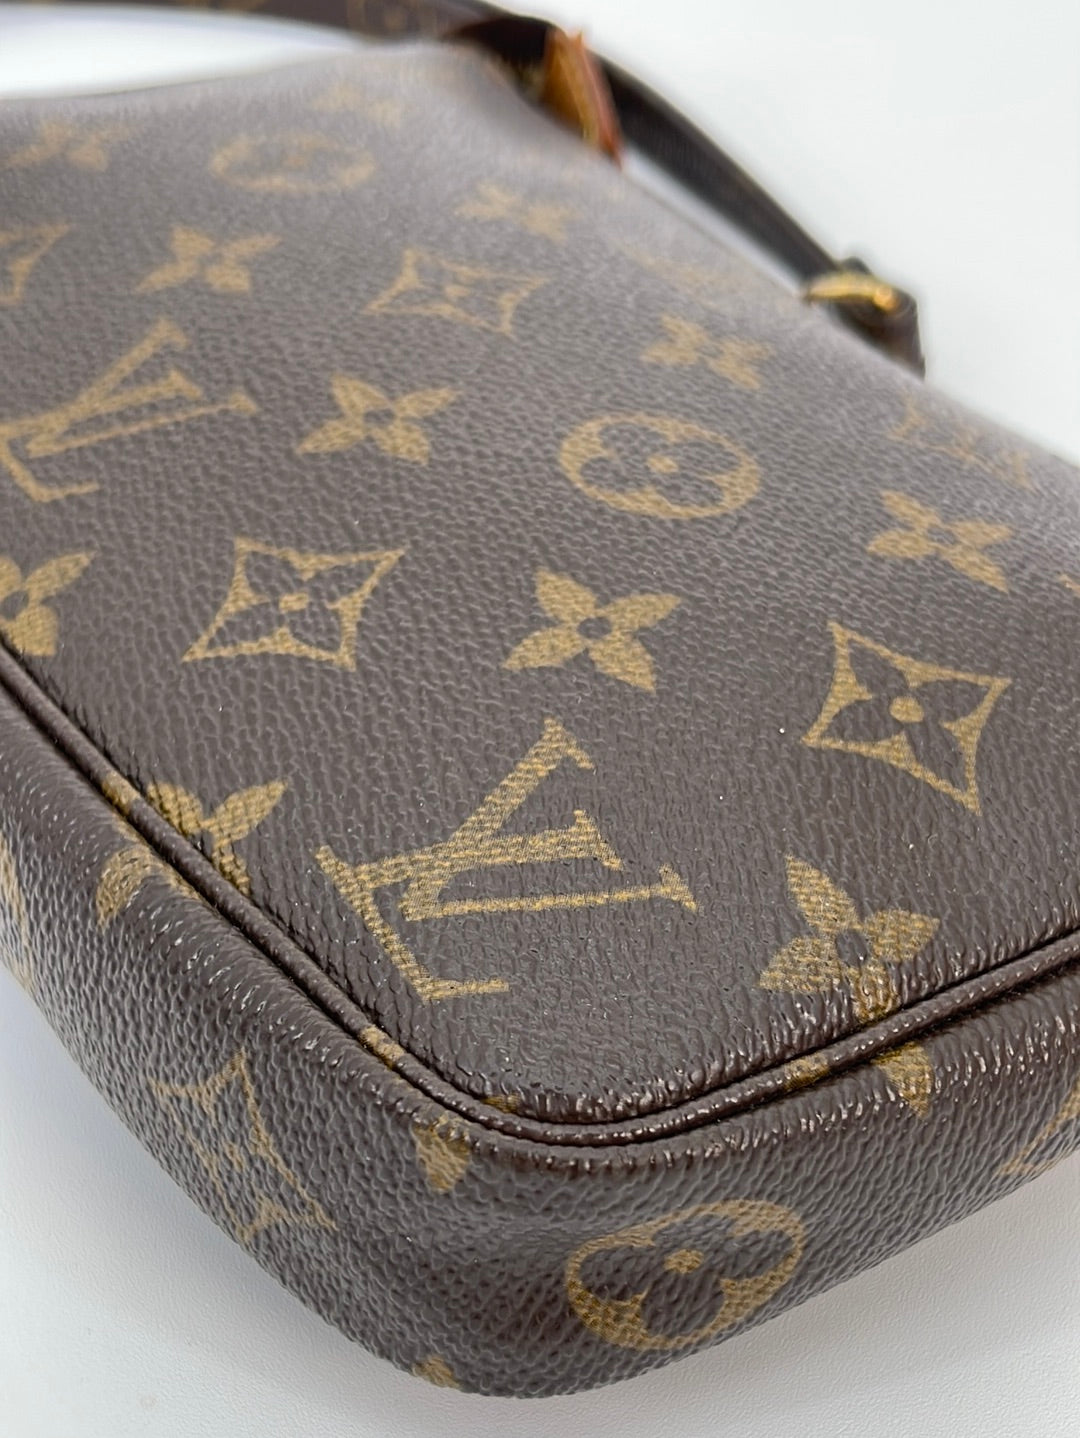 PRELOVED Vintage Louis Vuitton Monogram Accessories Pochette Bag VI0071 040123